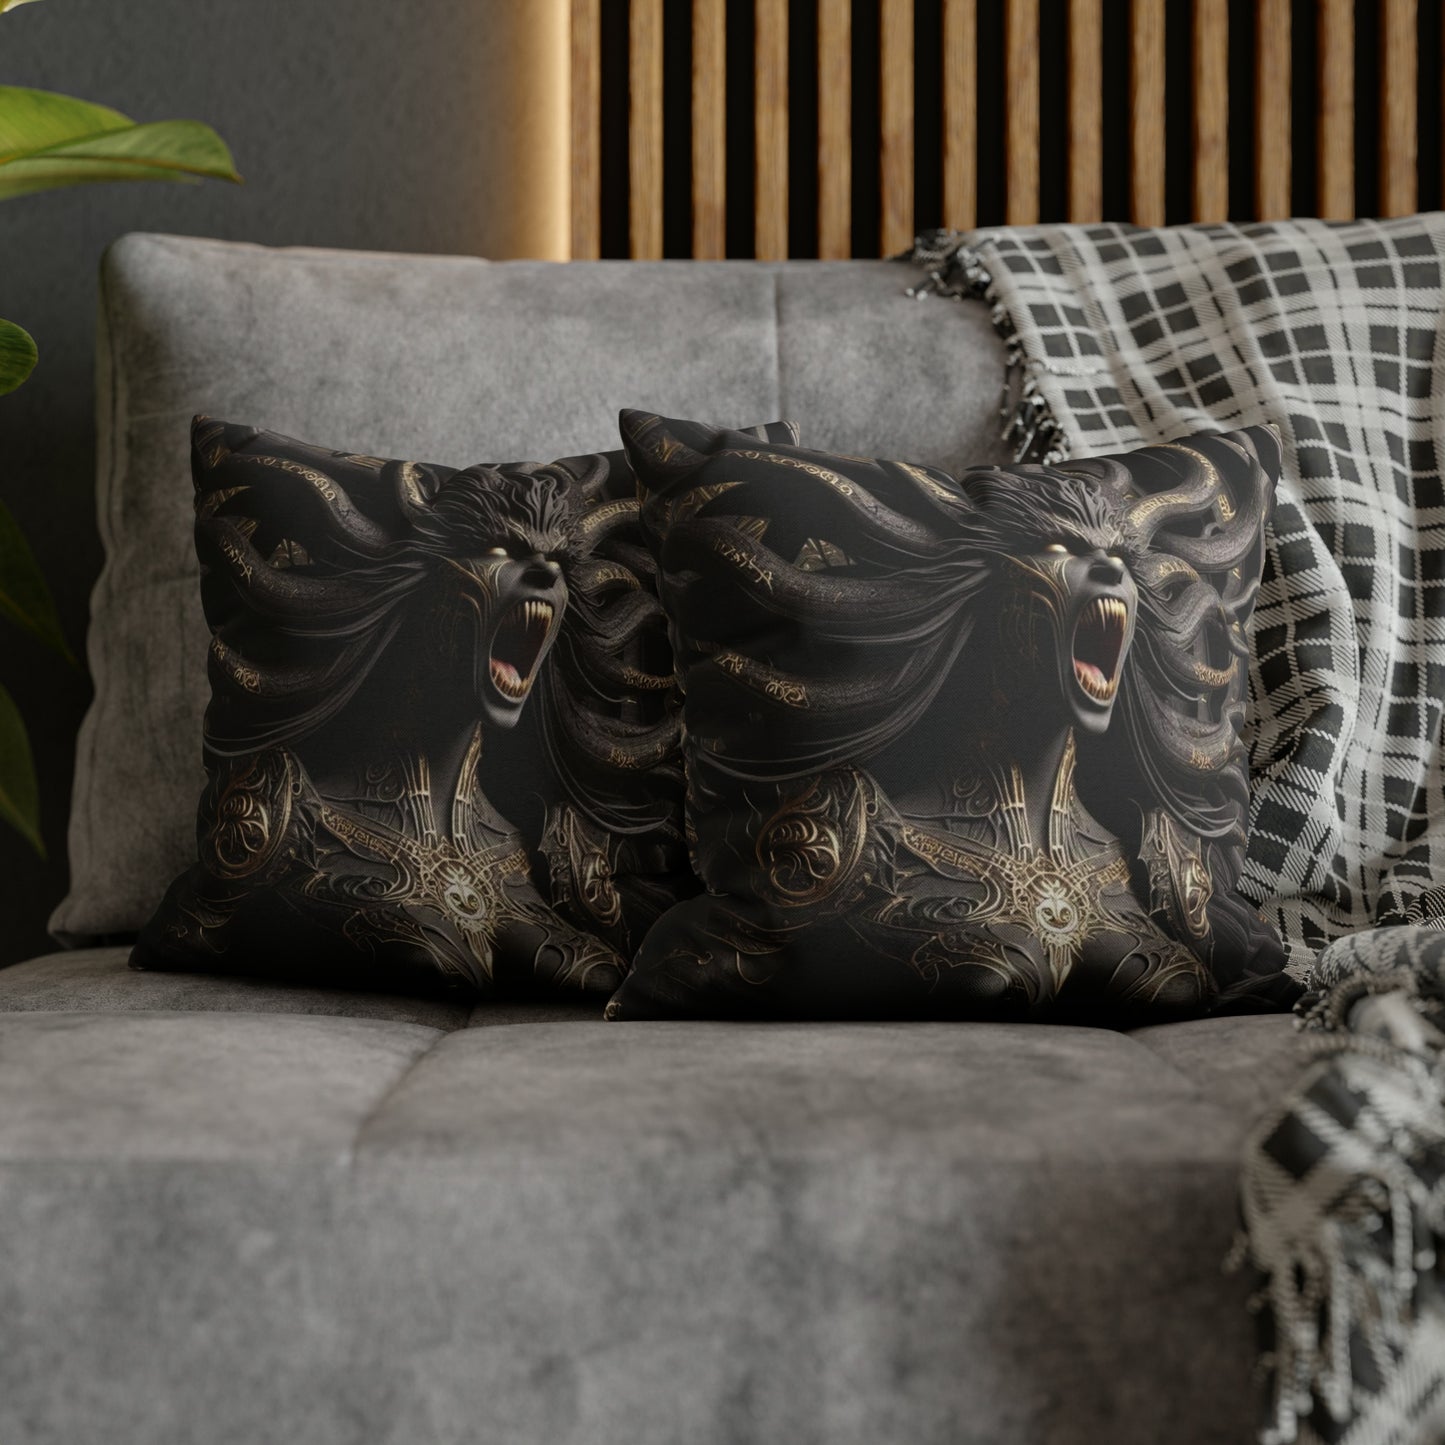 Lilith Fantasy Throw Pillow Cover – Perfect Dark Fantasy Fan Gift for Enchanting Home Decor Home Decor   